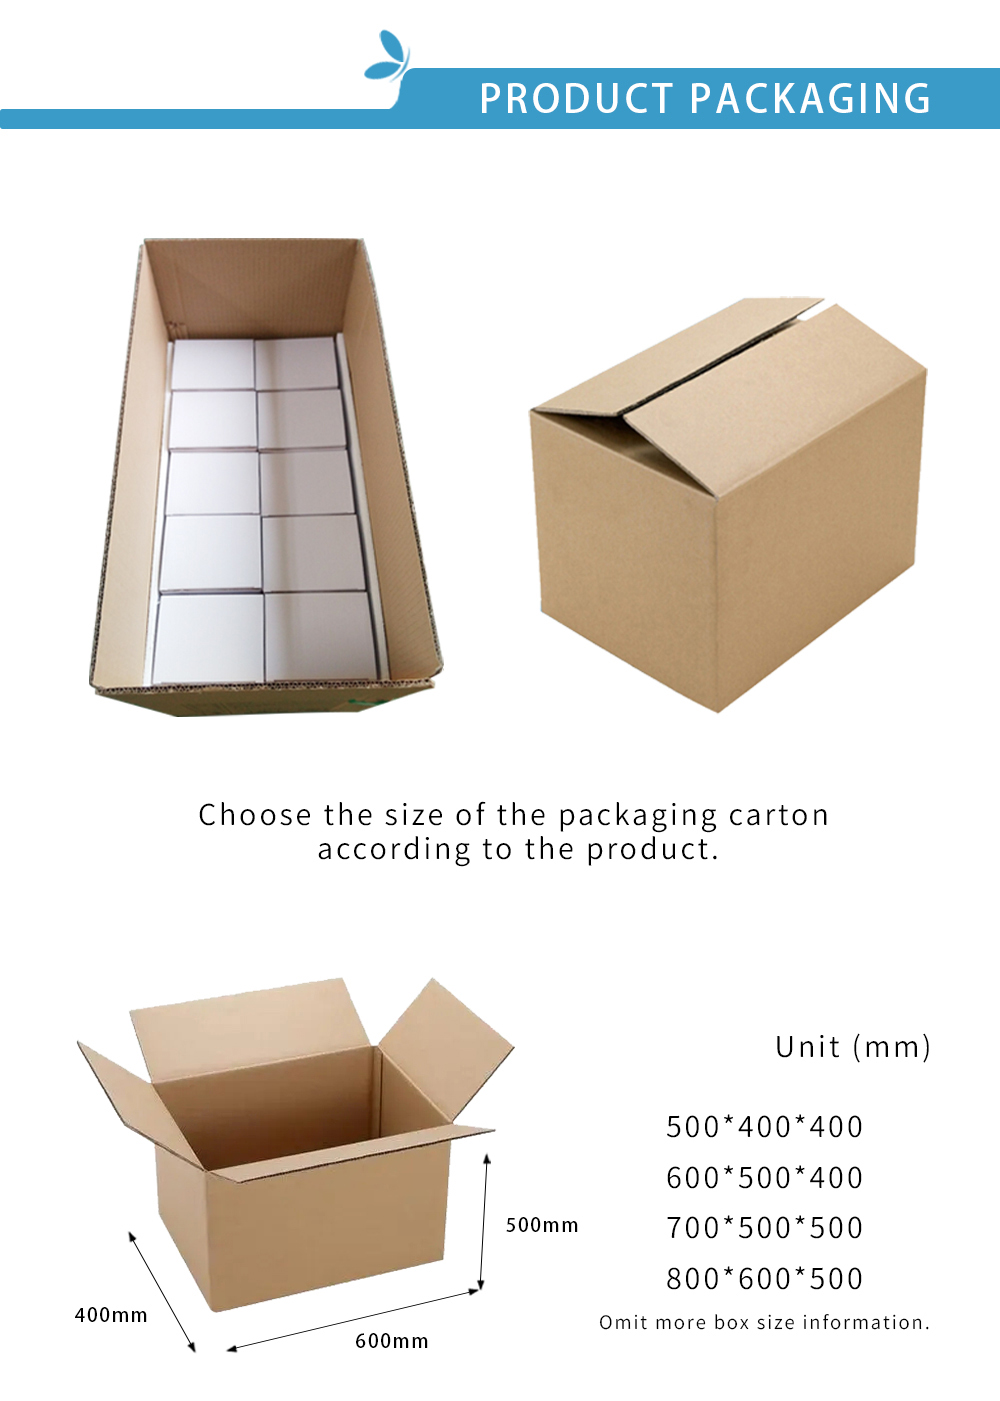 4. Lip glaze packing box